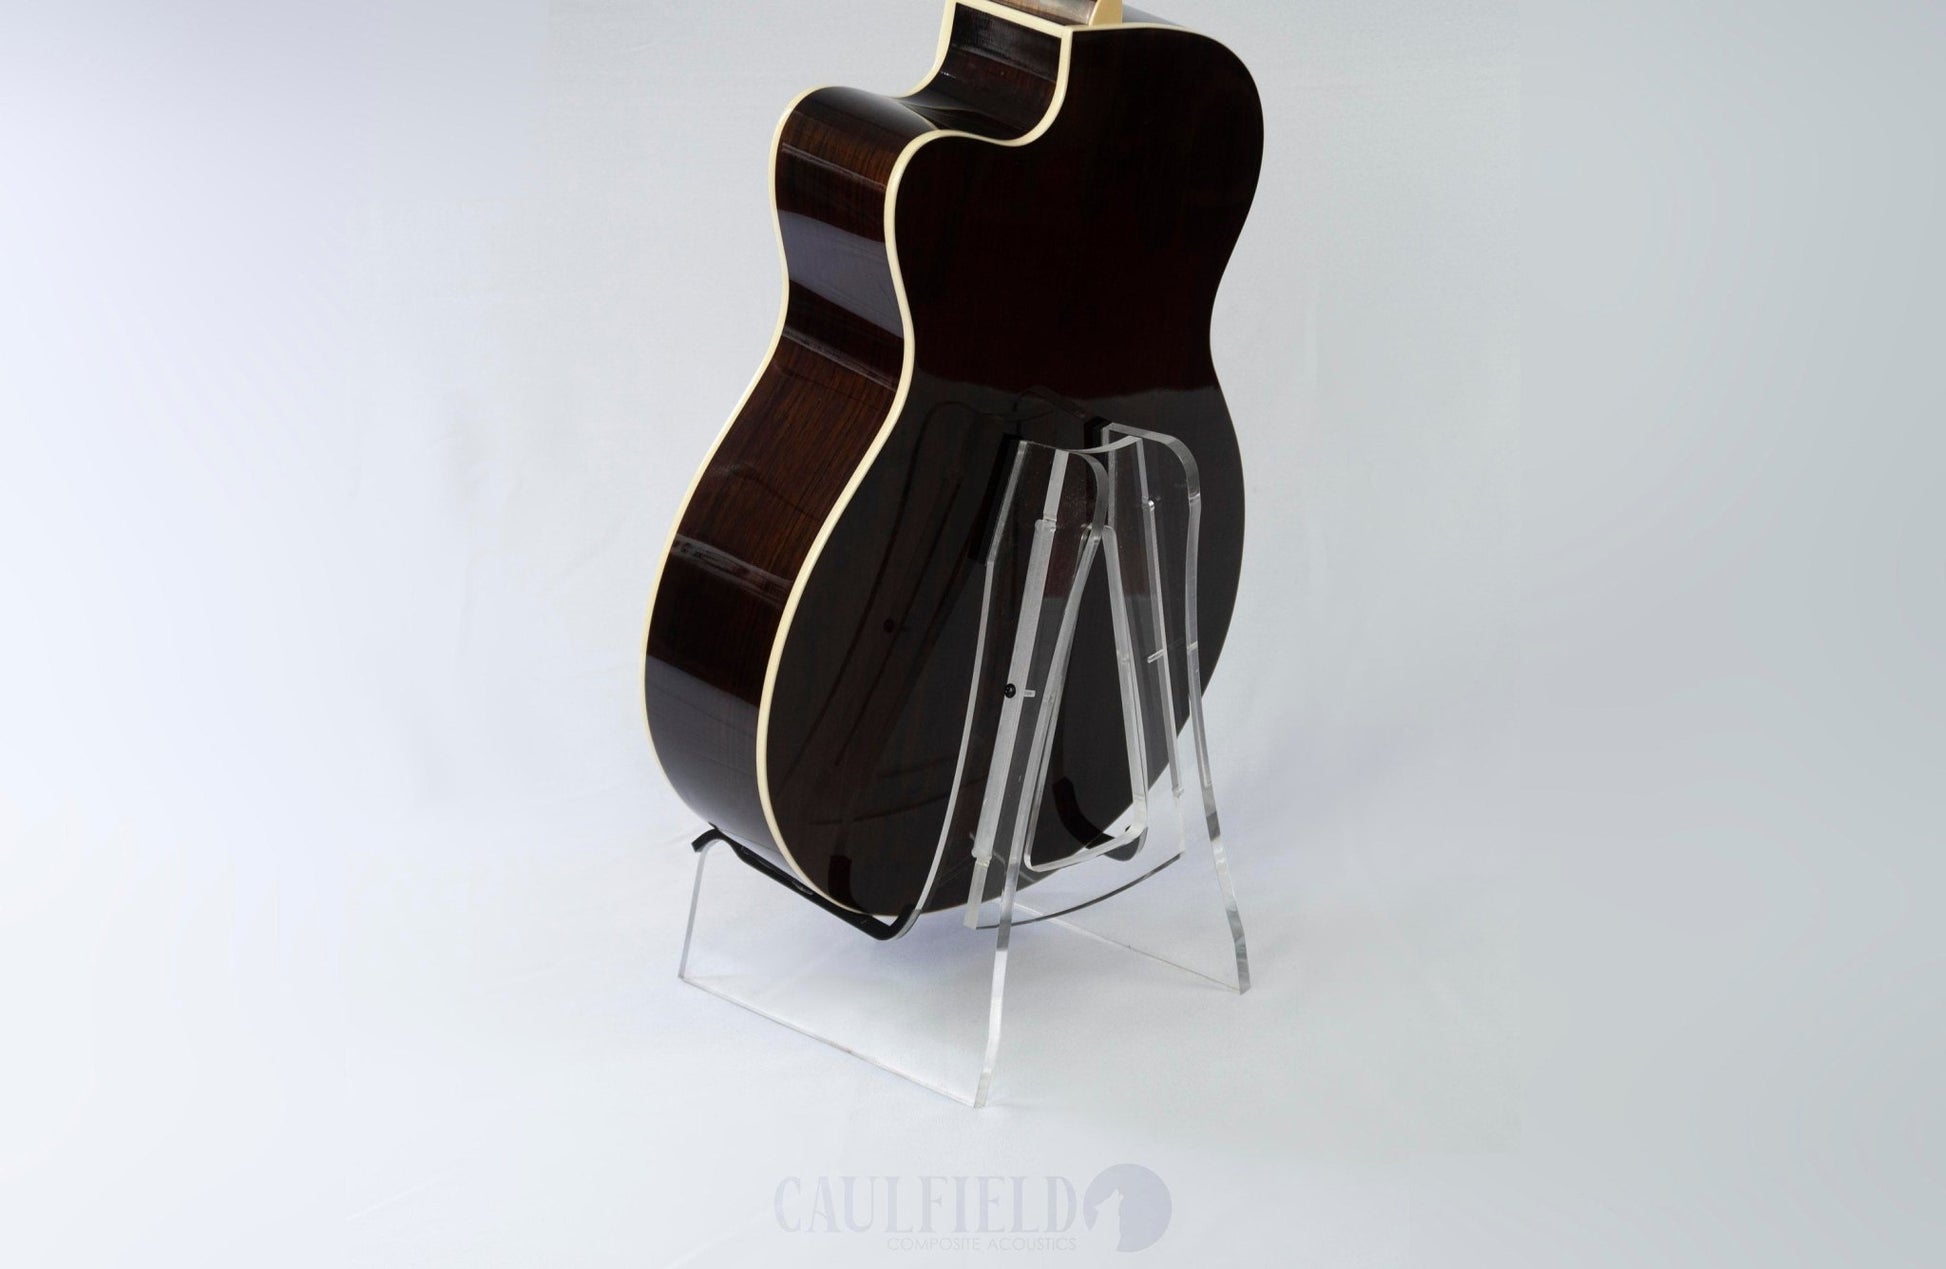 Transparent Guitar Stand - Bulletproof Polymer Glass, Made to order, 1 Guitar Holder, Customisable Transparent, Ireland - Caulfield Composites Standard No Engraving